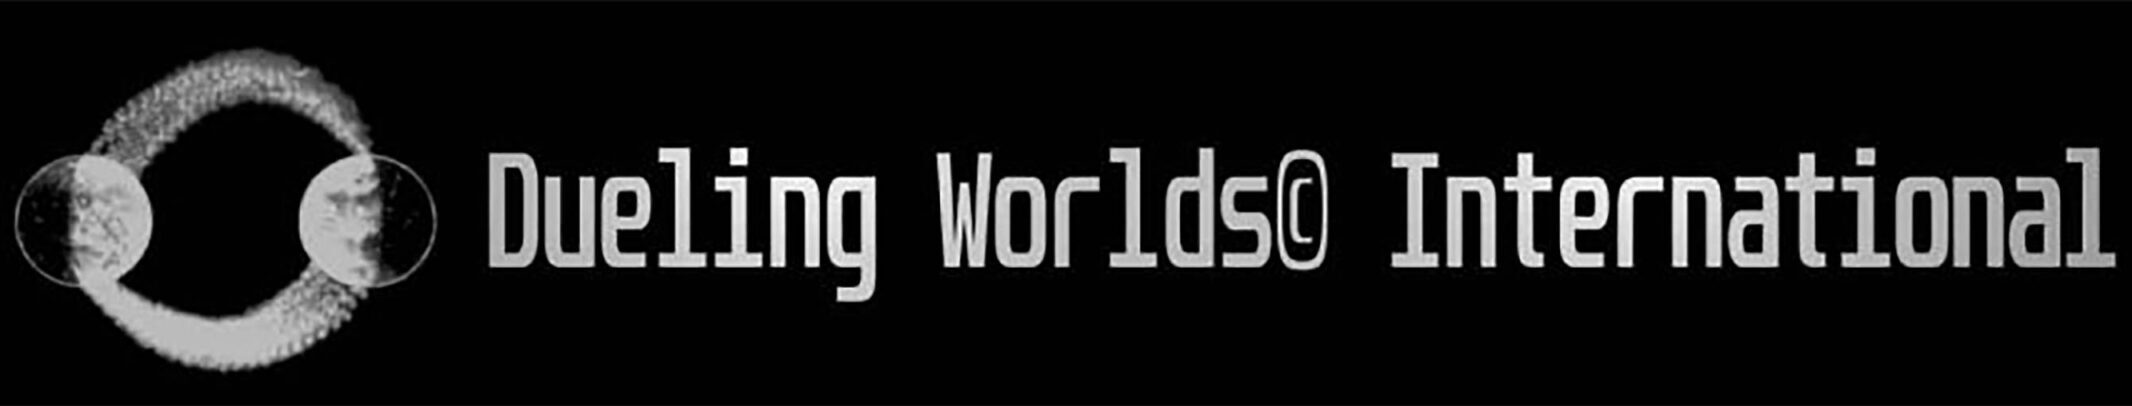 Dueling Worlds© International